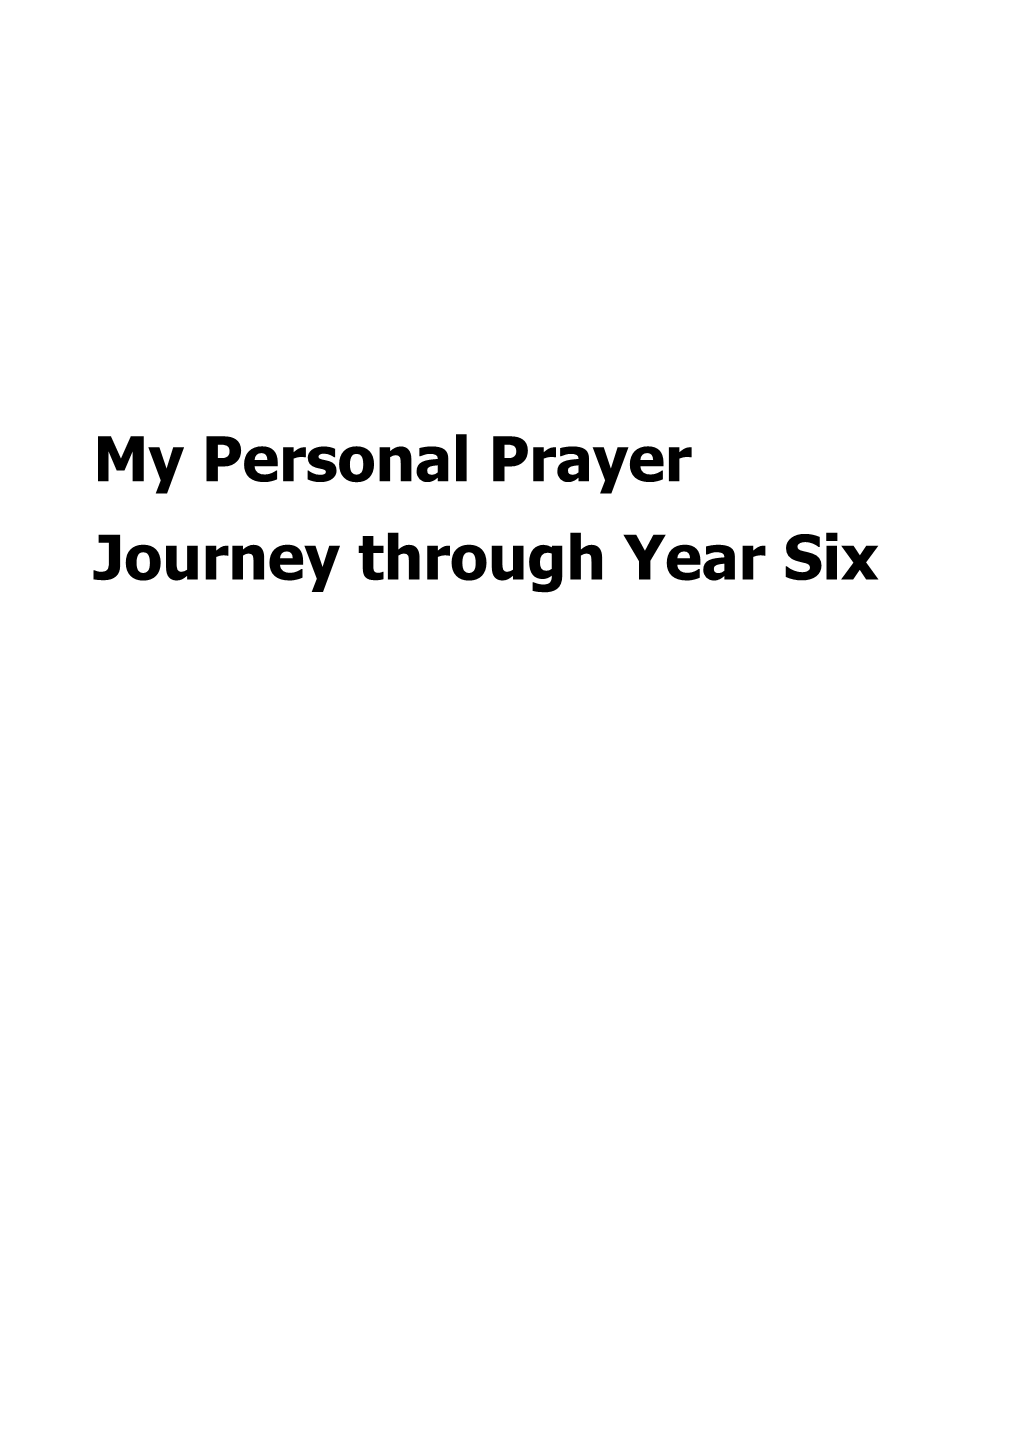 Journey Through Year Six